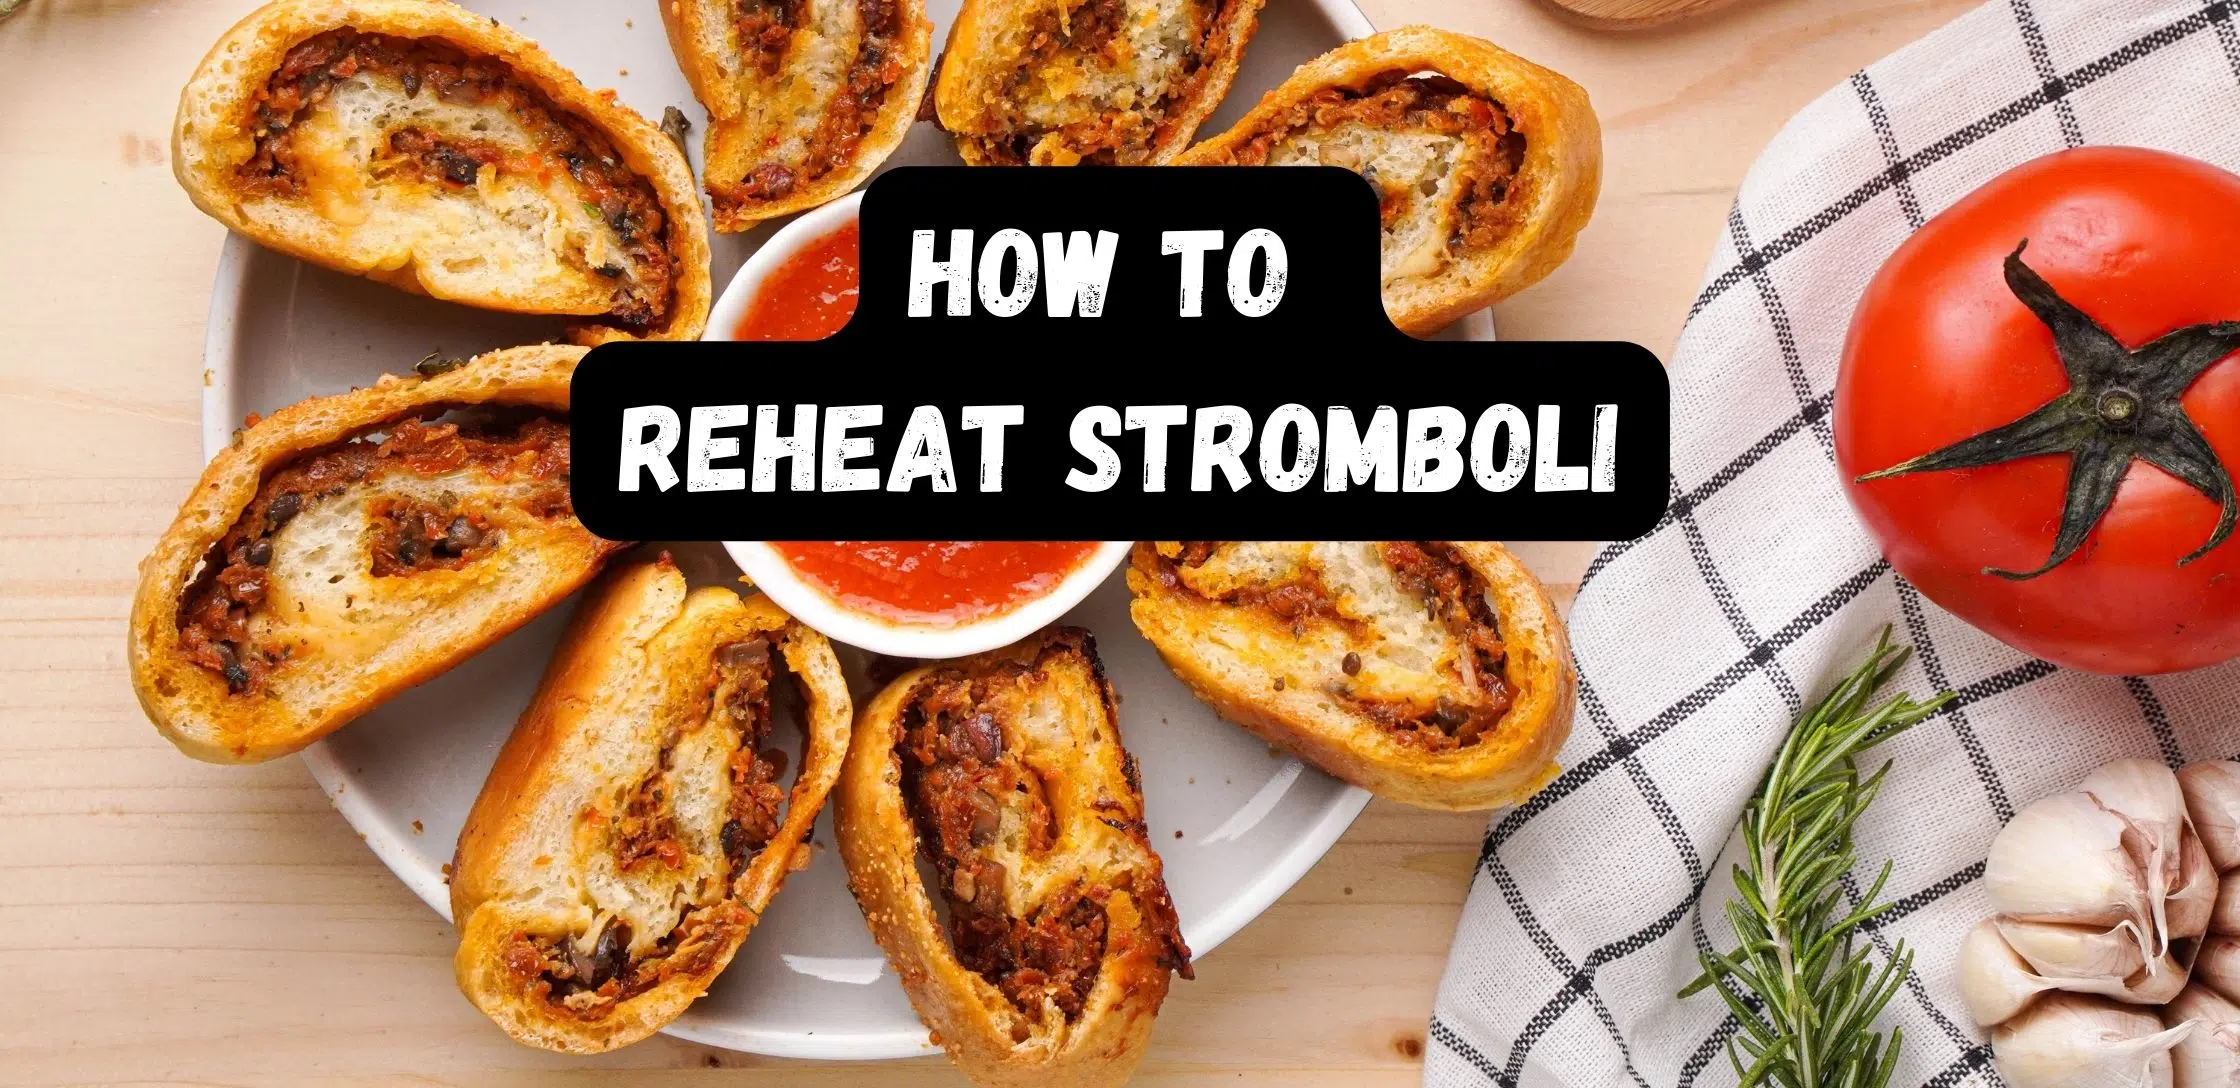 Retaining Freshness and Flavor: How to Properly Reheat Stromboli